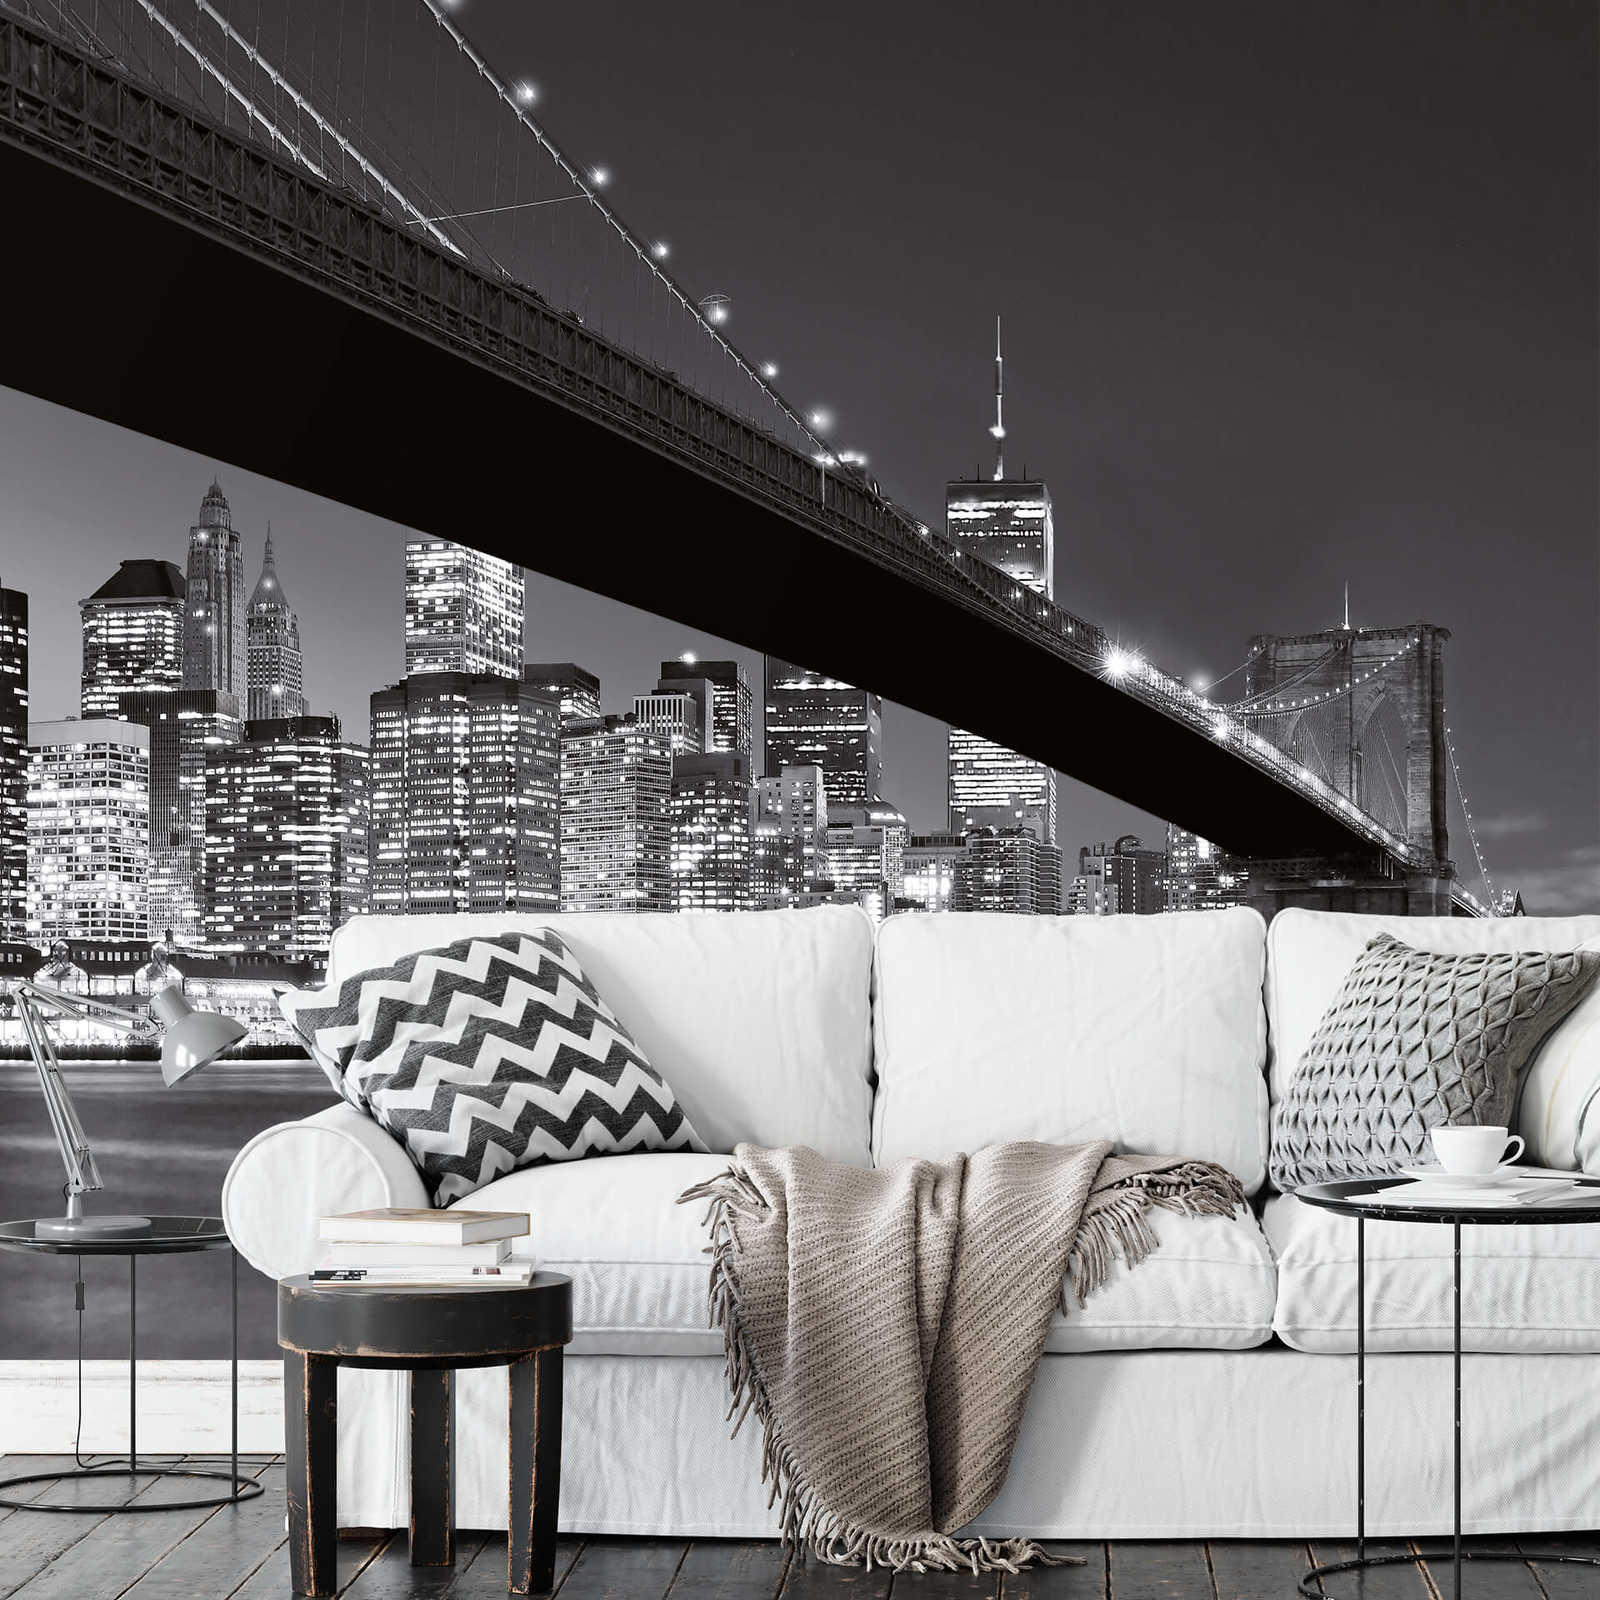             Brooklyn Bridge New York mural in black and white
        